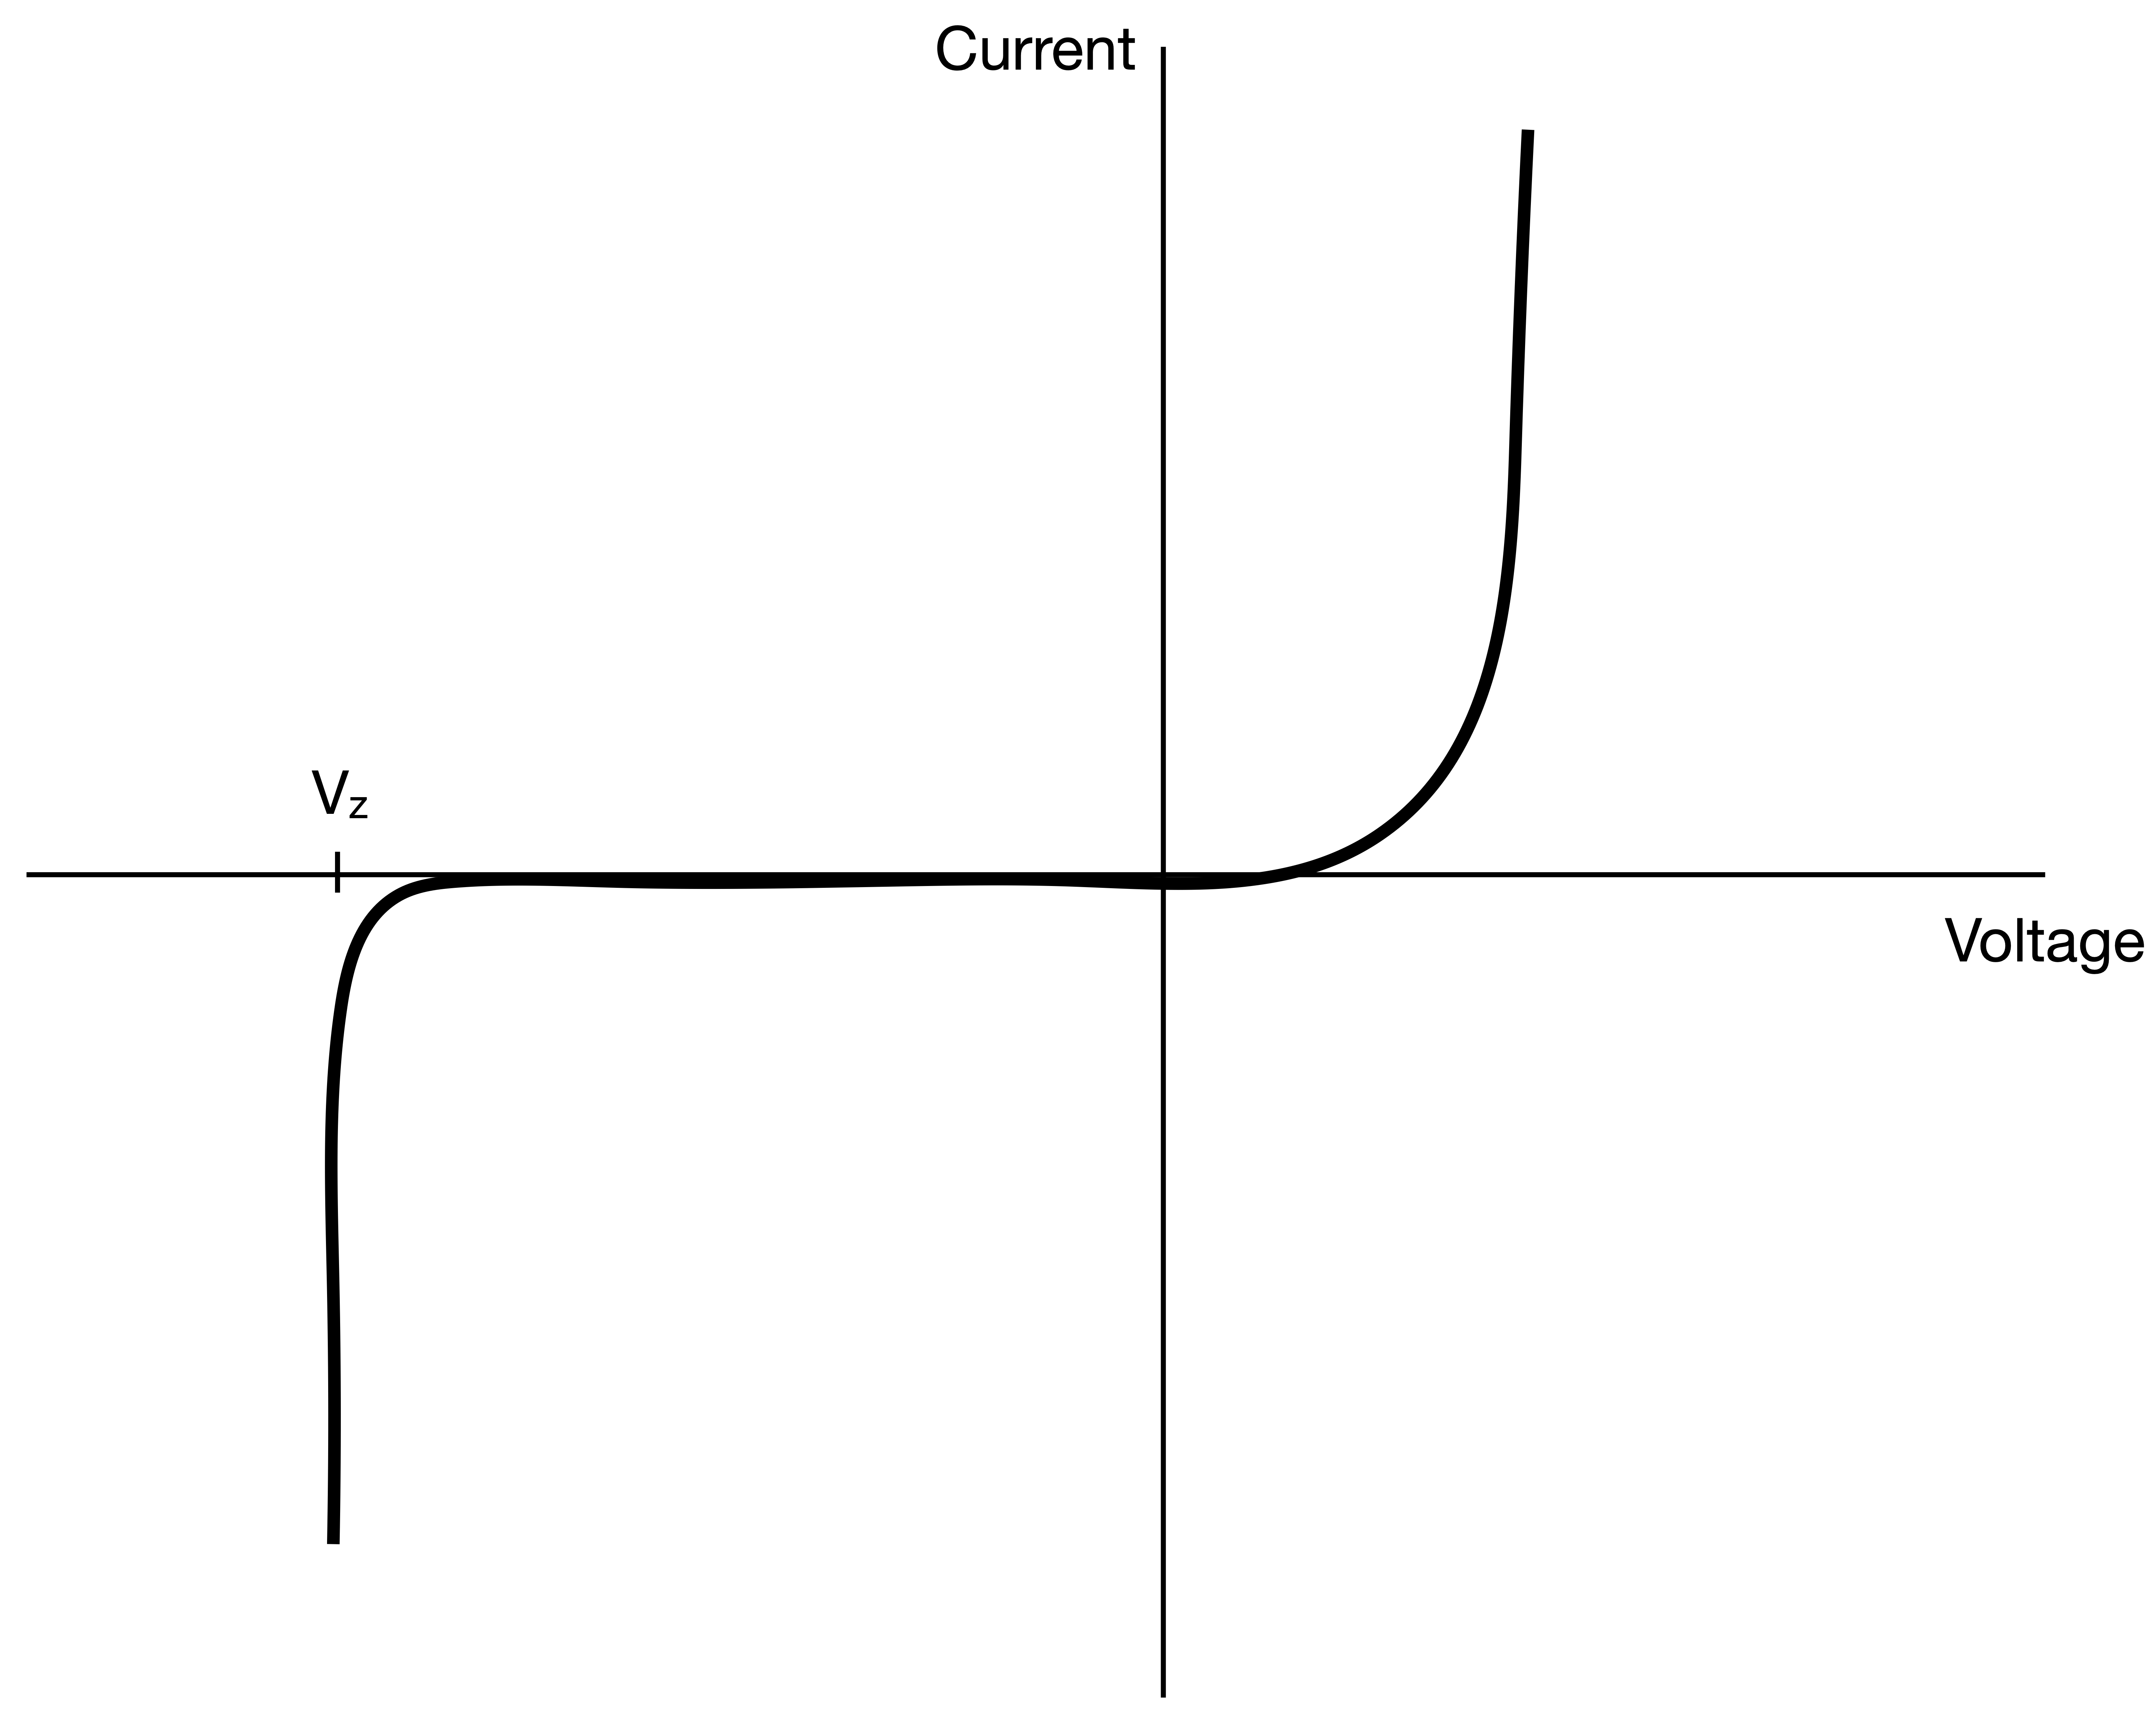 Zener IV curve